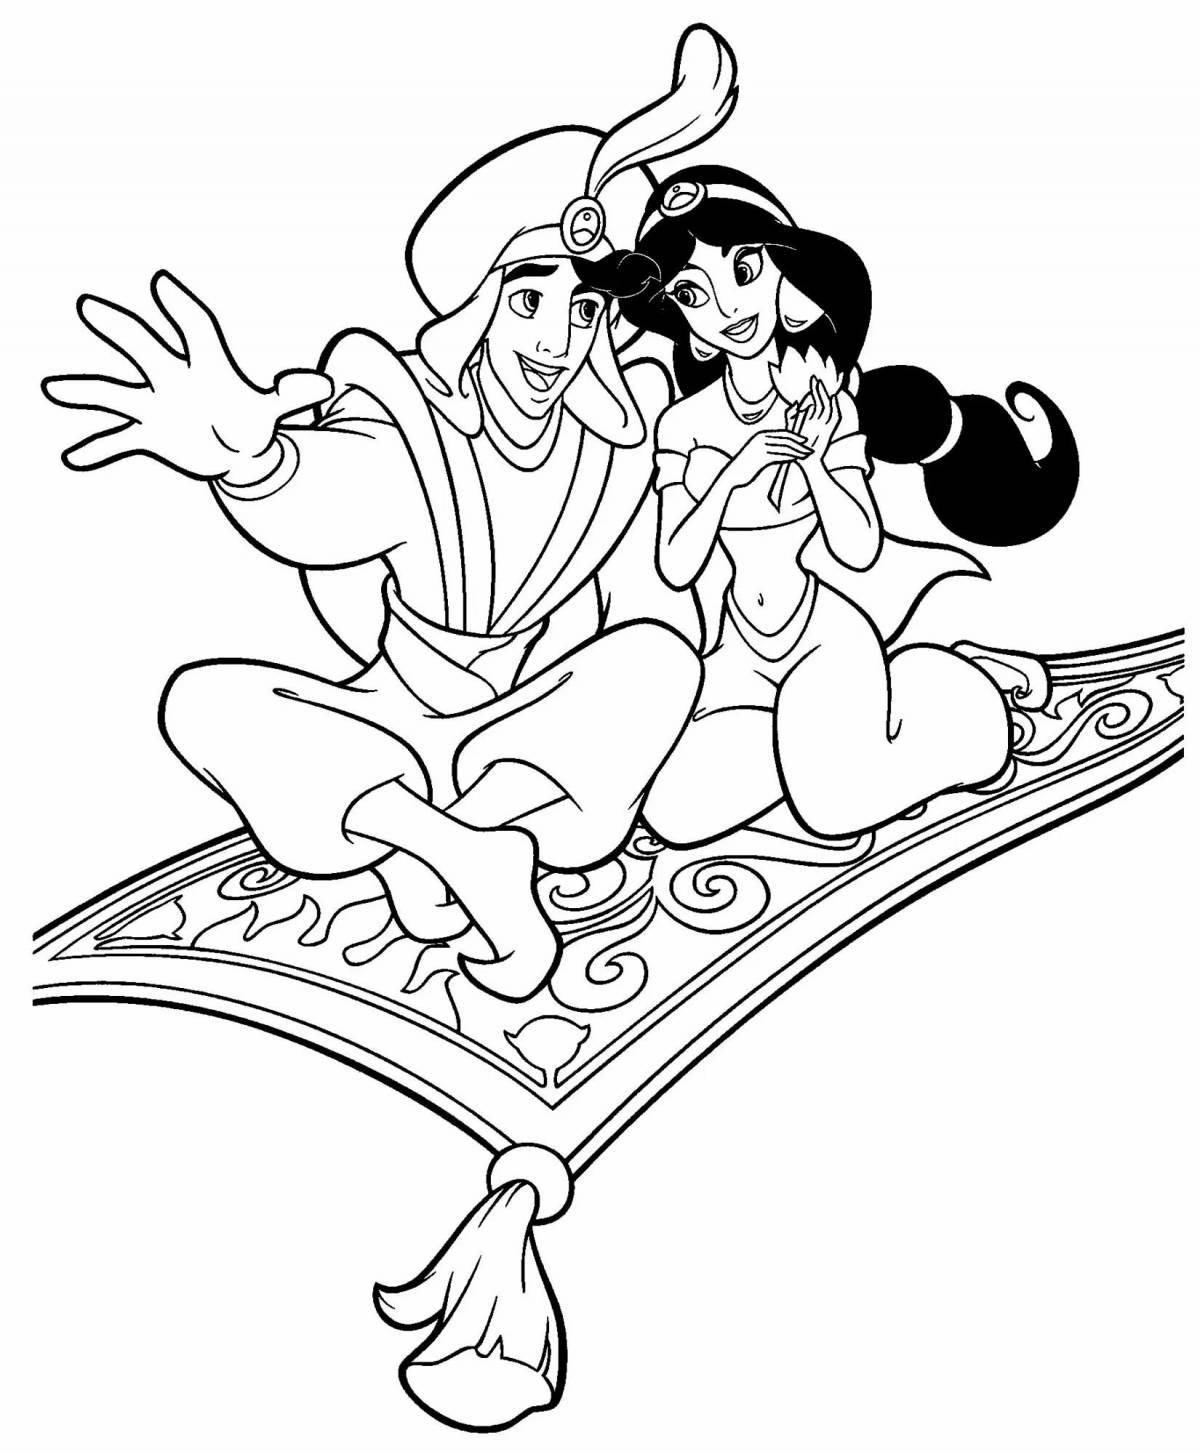 Aladdin colorful coloring page